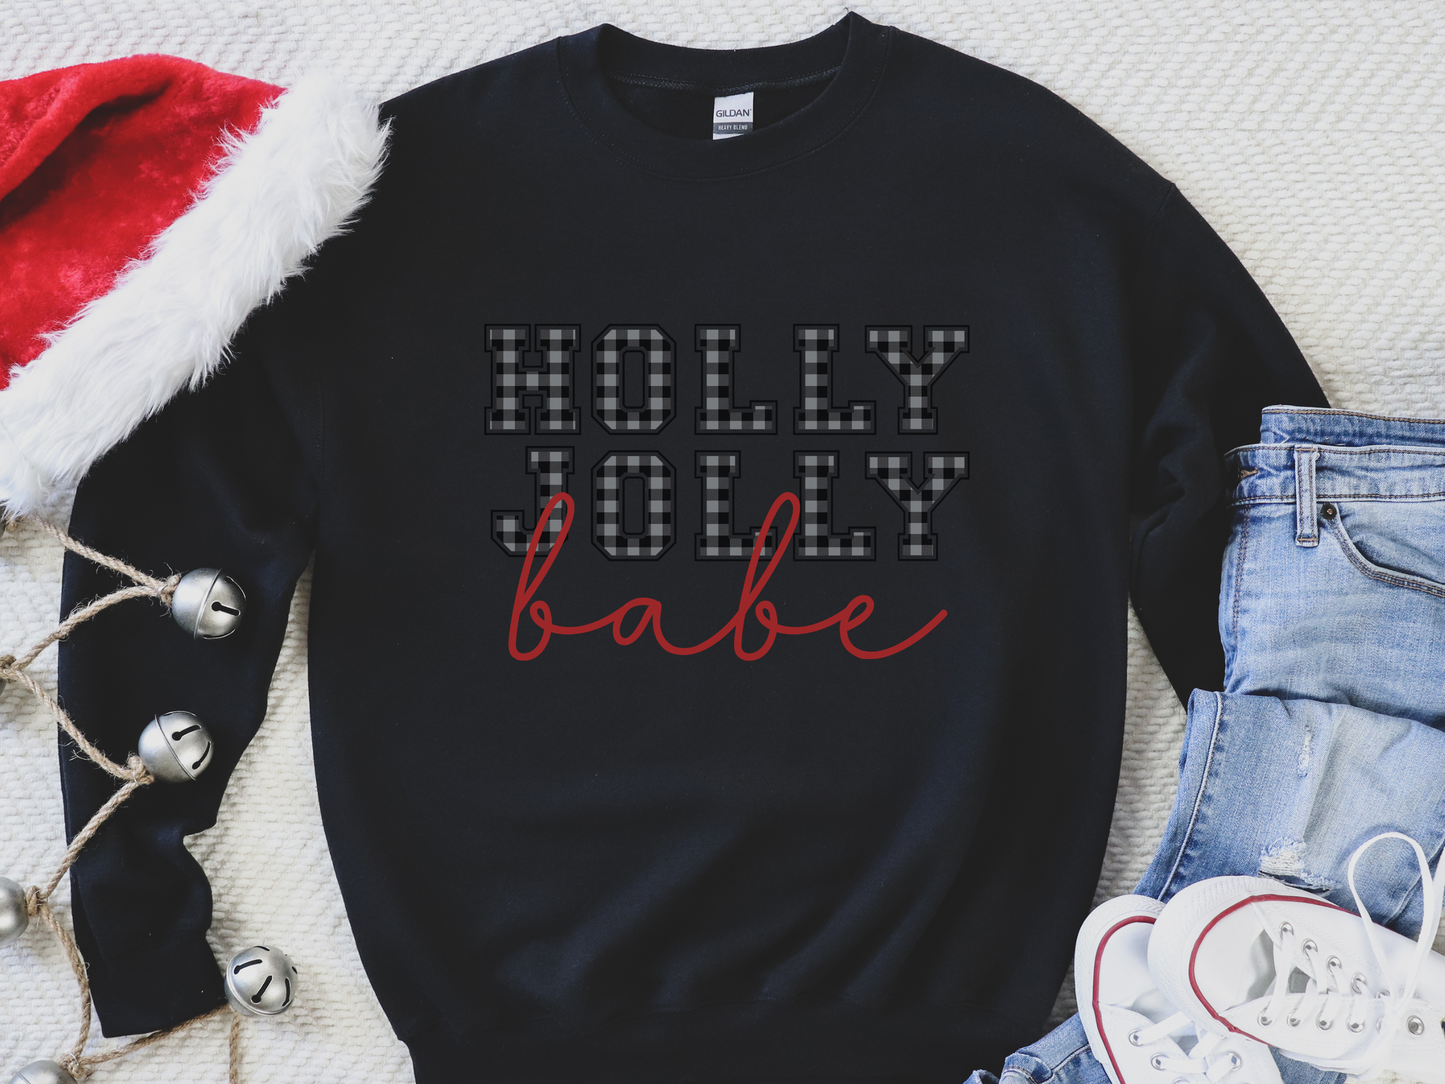 Holly Jolly Babe Christmas Sweatshirt